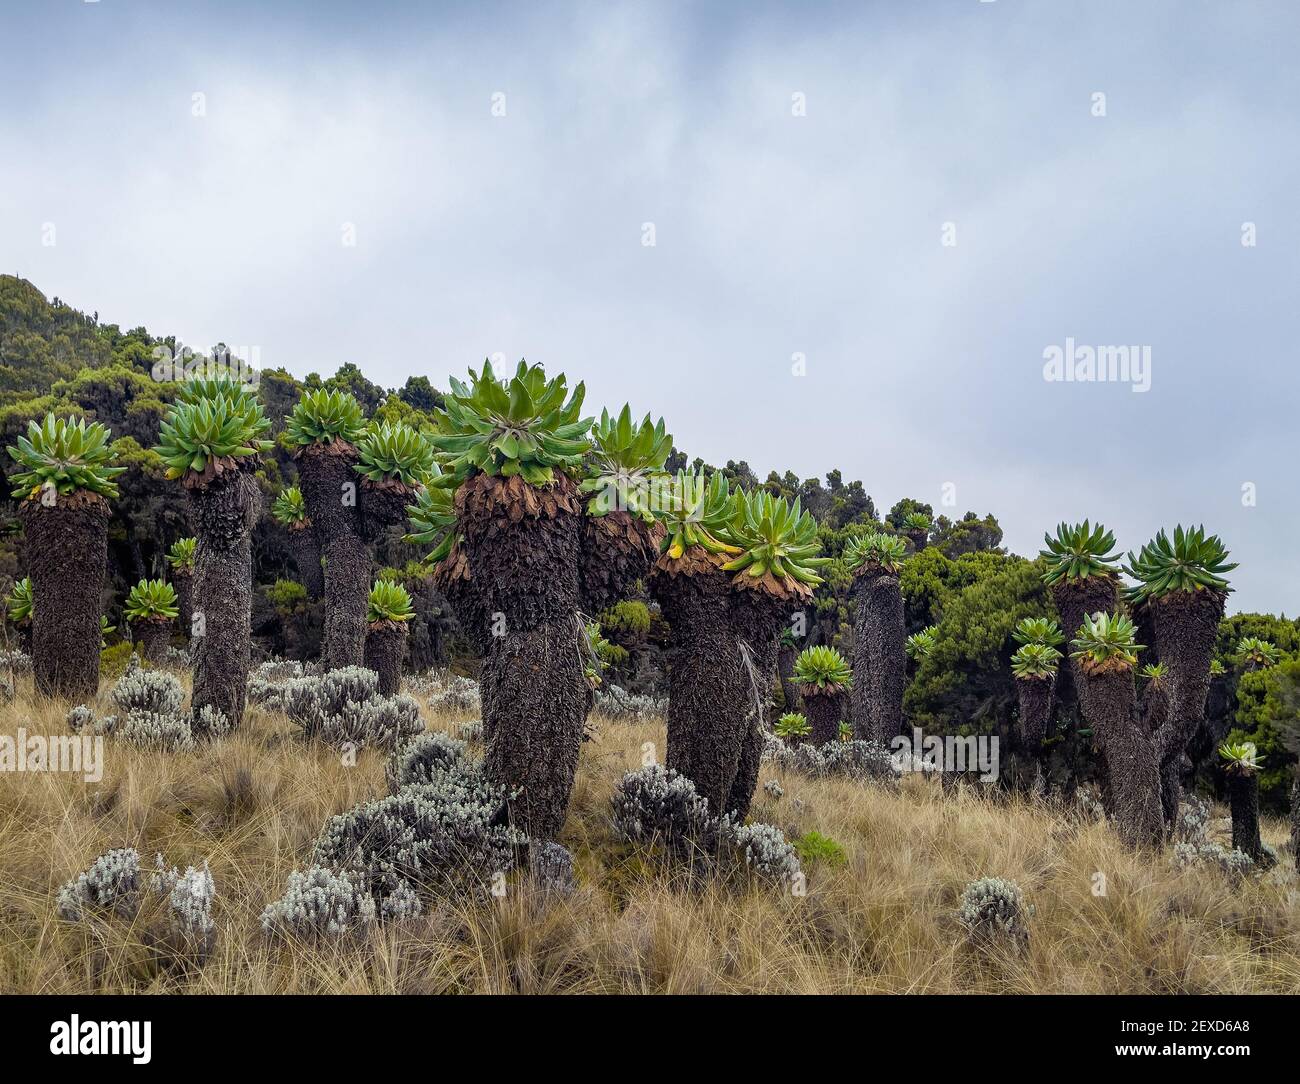 Dendrosenecio kilimanjari - high altitude Moorland zones unique plant. It is a giant groundsel found on Mount Kilimanjaro in Africa, Tanzania. Barranc Stock Photo